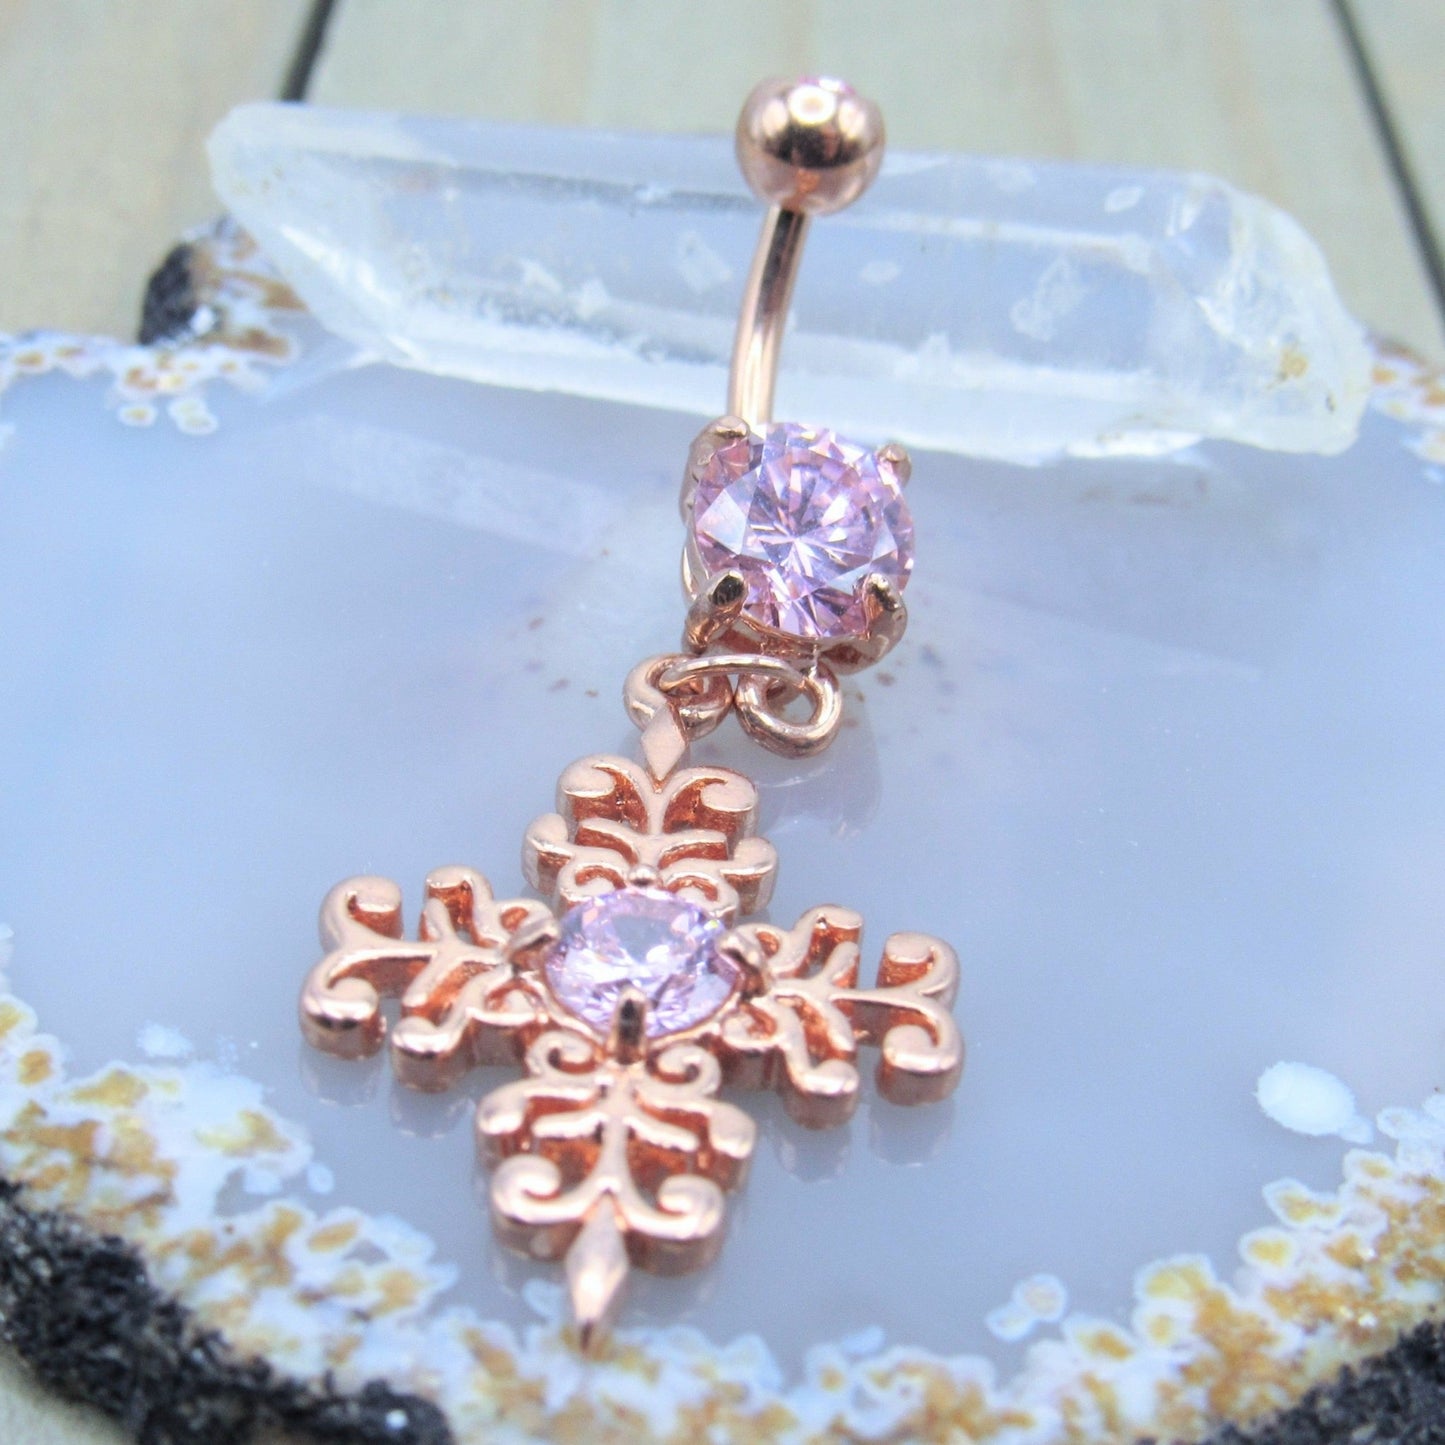 Rose gold cross dangle belly button piercing jewelry 14g 7/16" elegant pink cz gemstones navel ring - Siren Body Jewelry